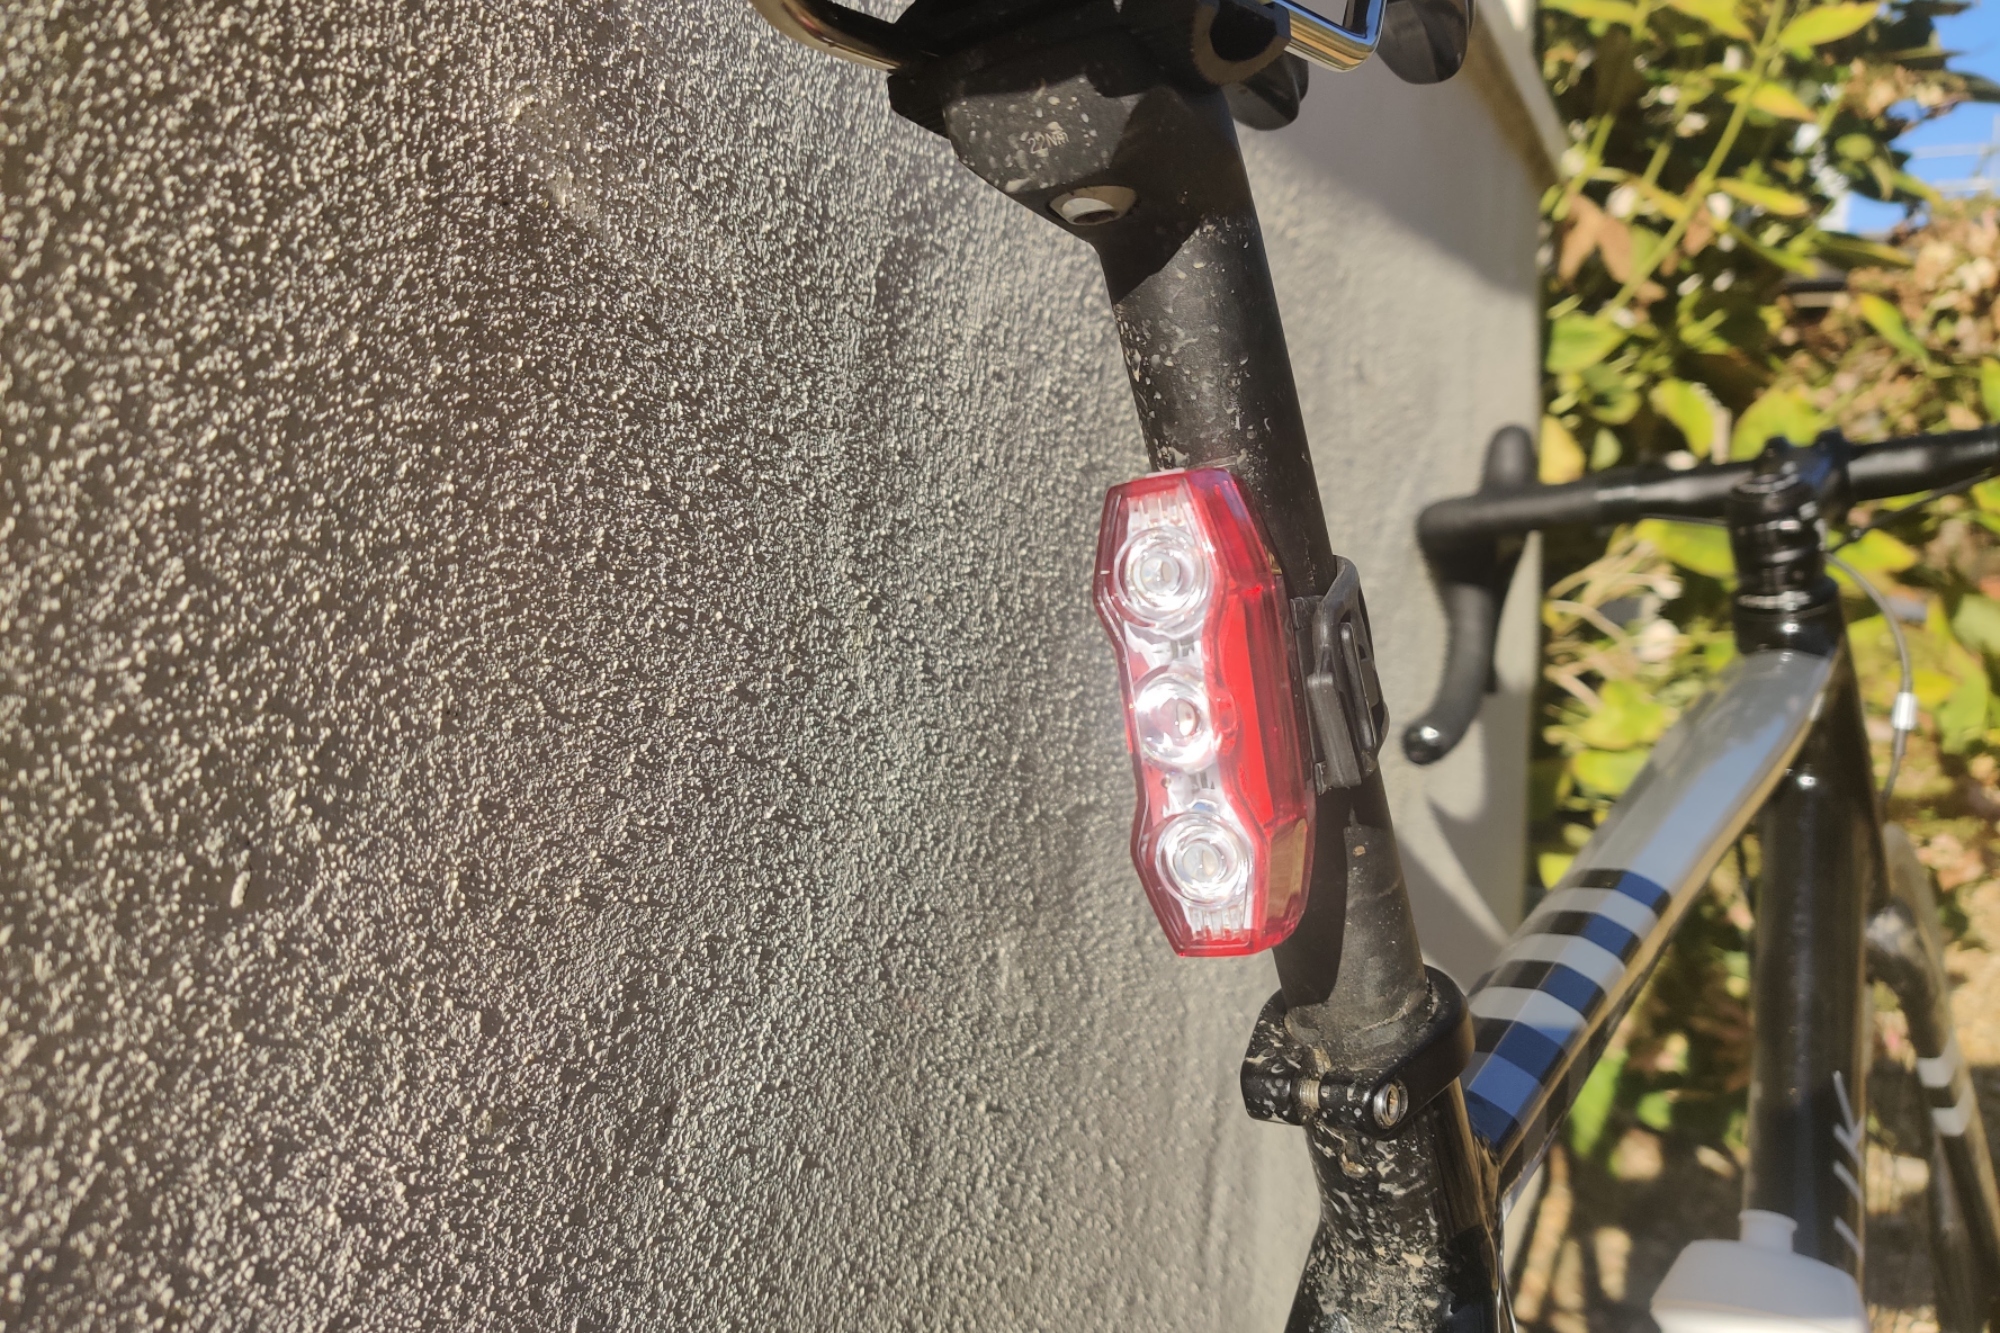 Image shows CatEye's ViZ300 rear light mounted to a bike.